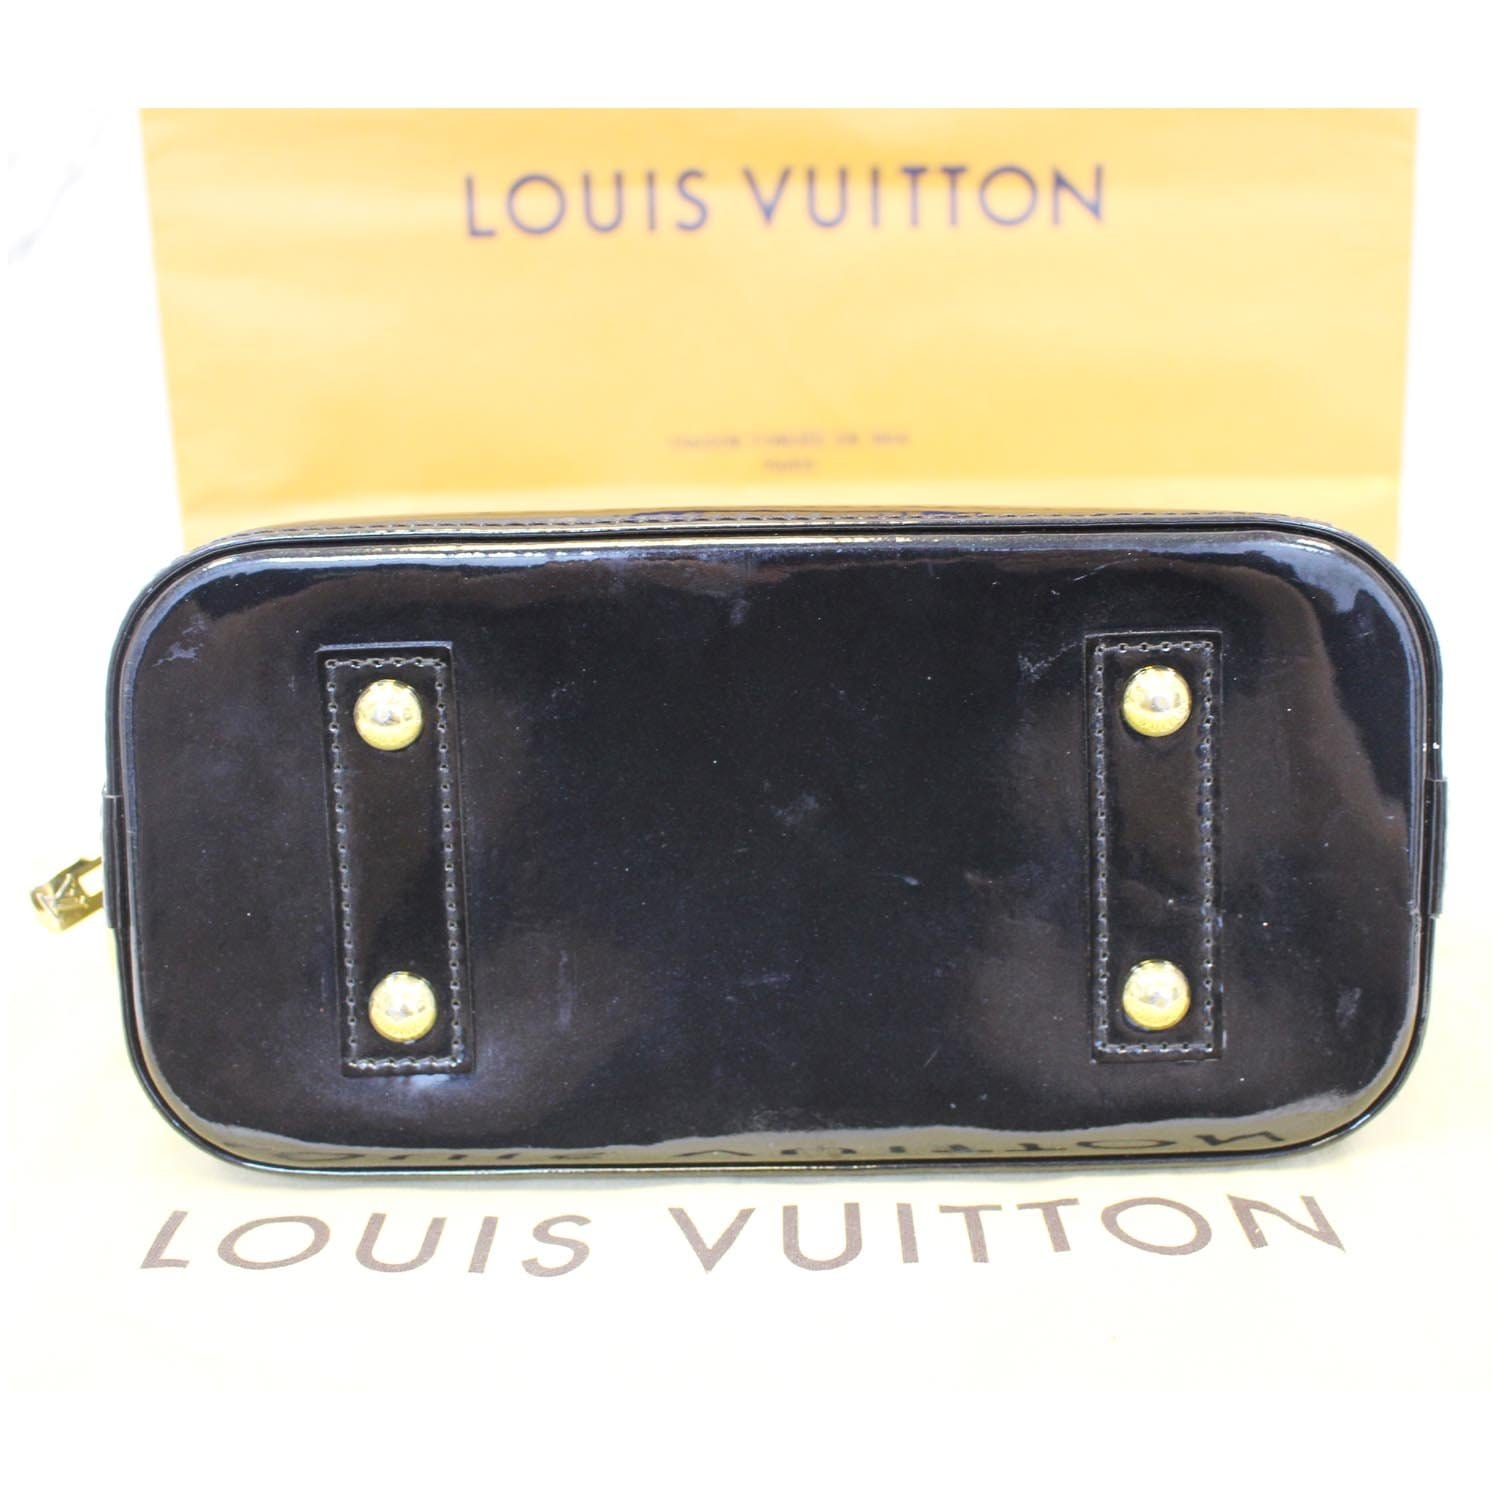 Louis Vuitton Alma BB in Galet Monogram Vernis - SOLD